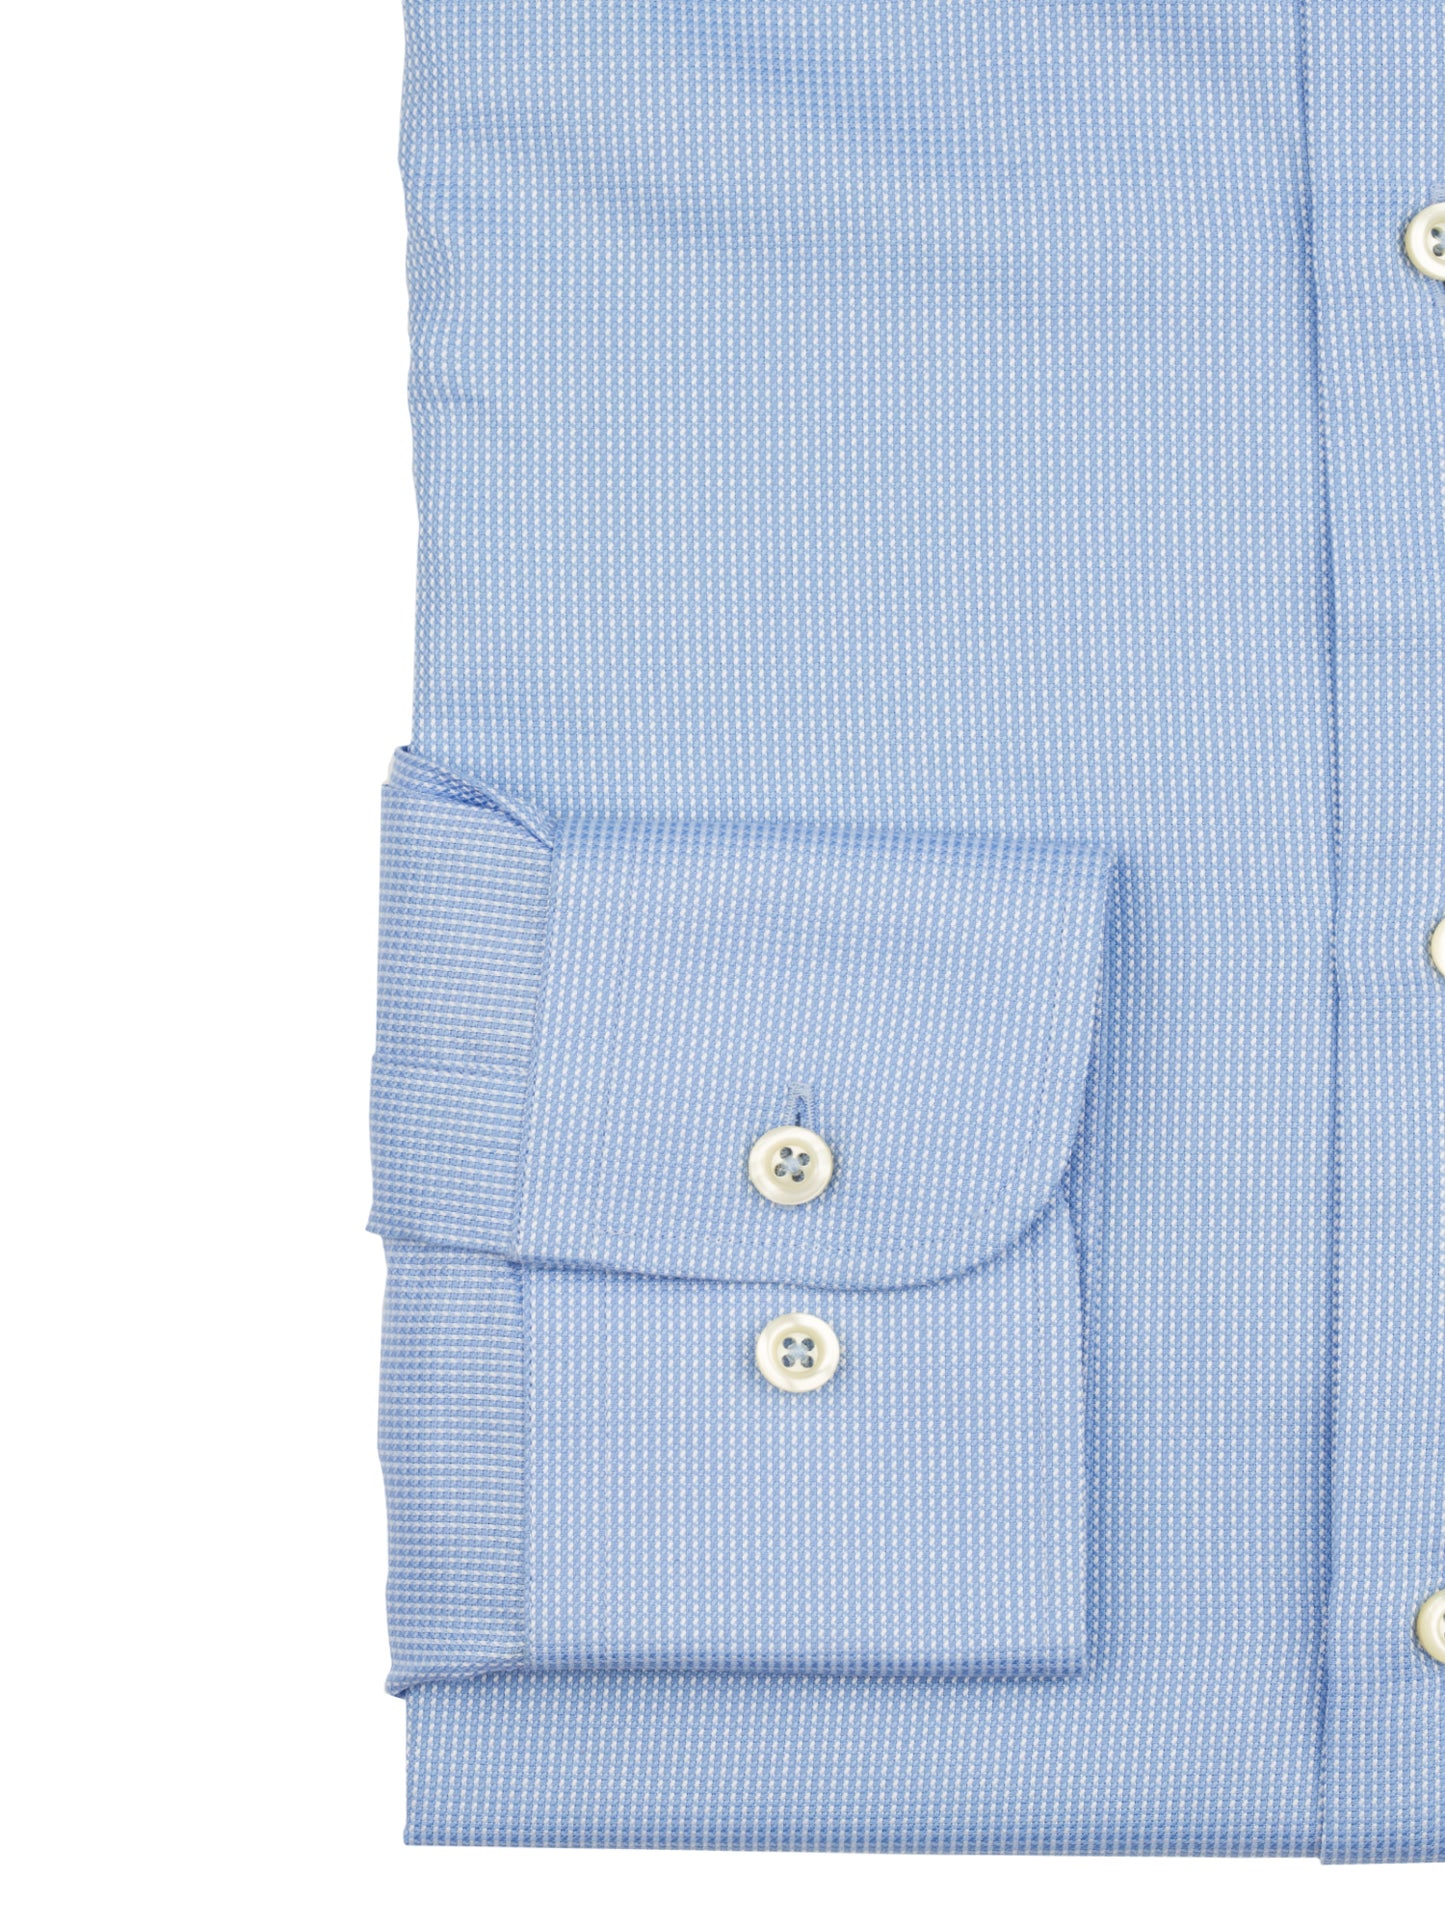 Light Blue Panama Texture Weave Dress Shirt